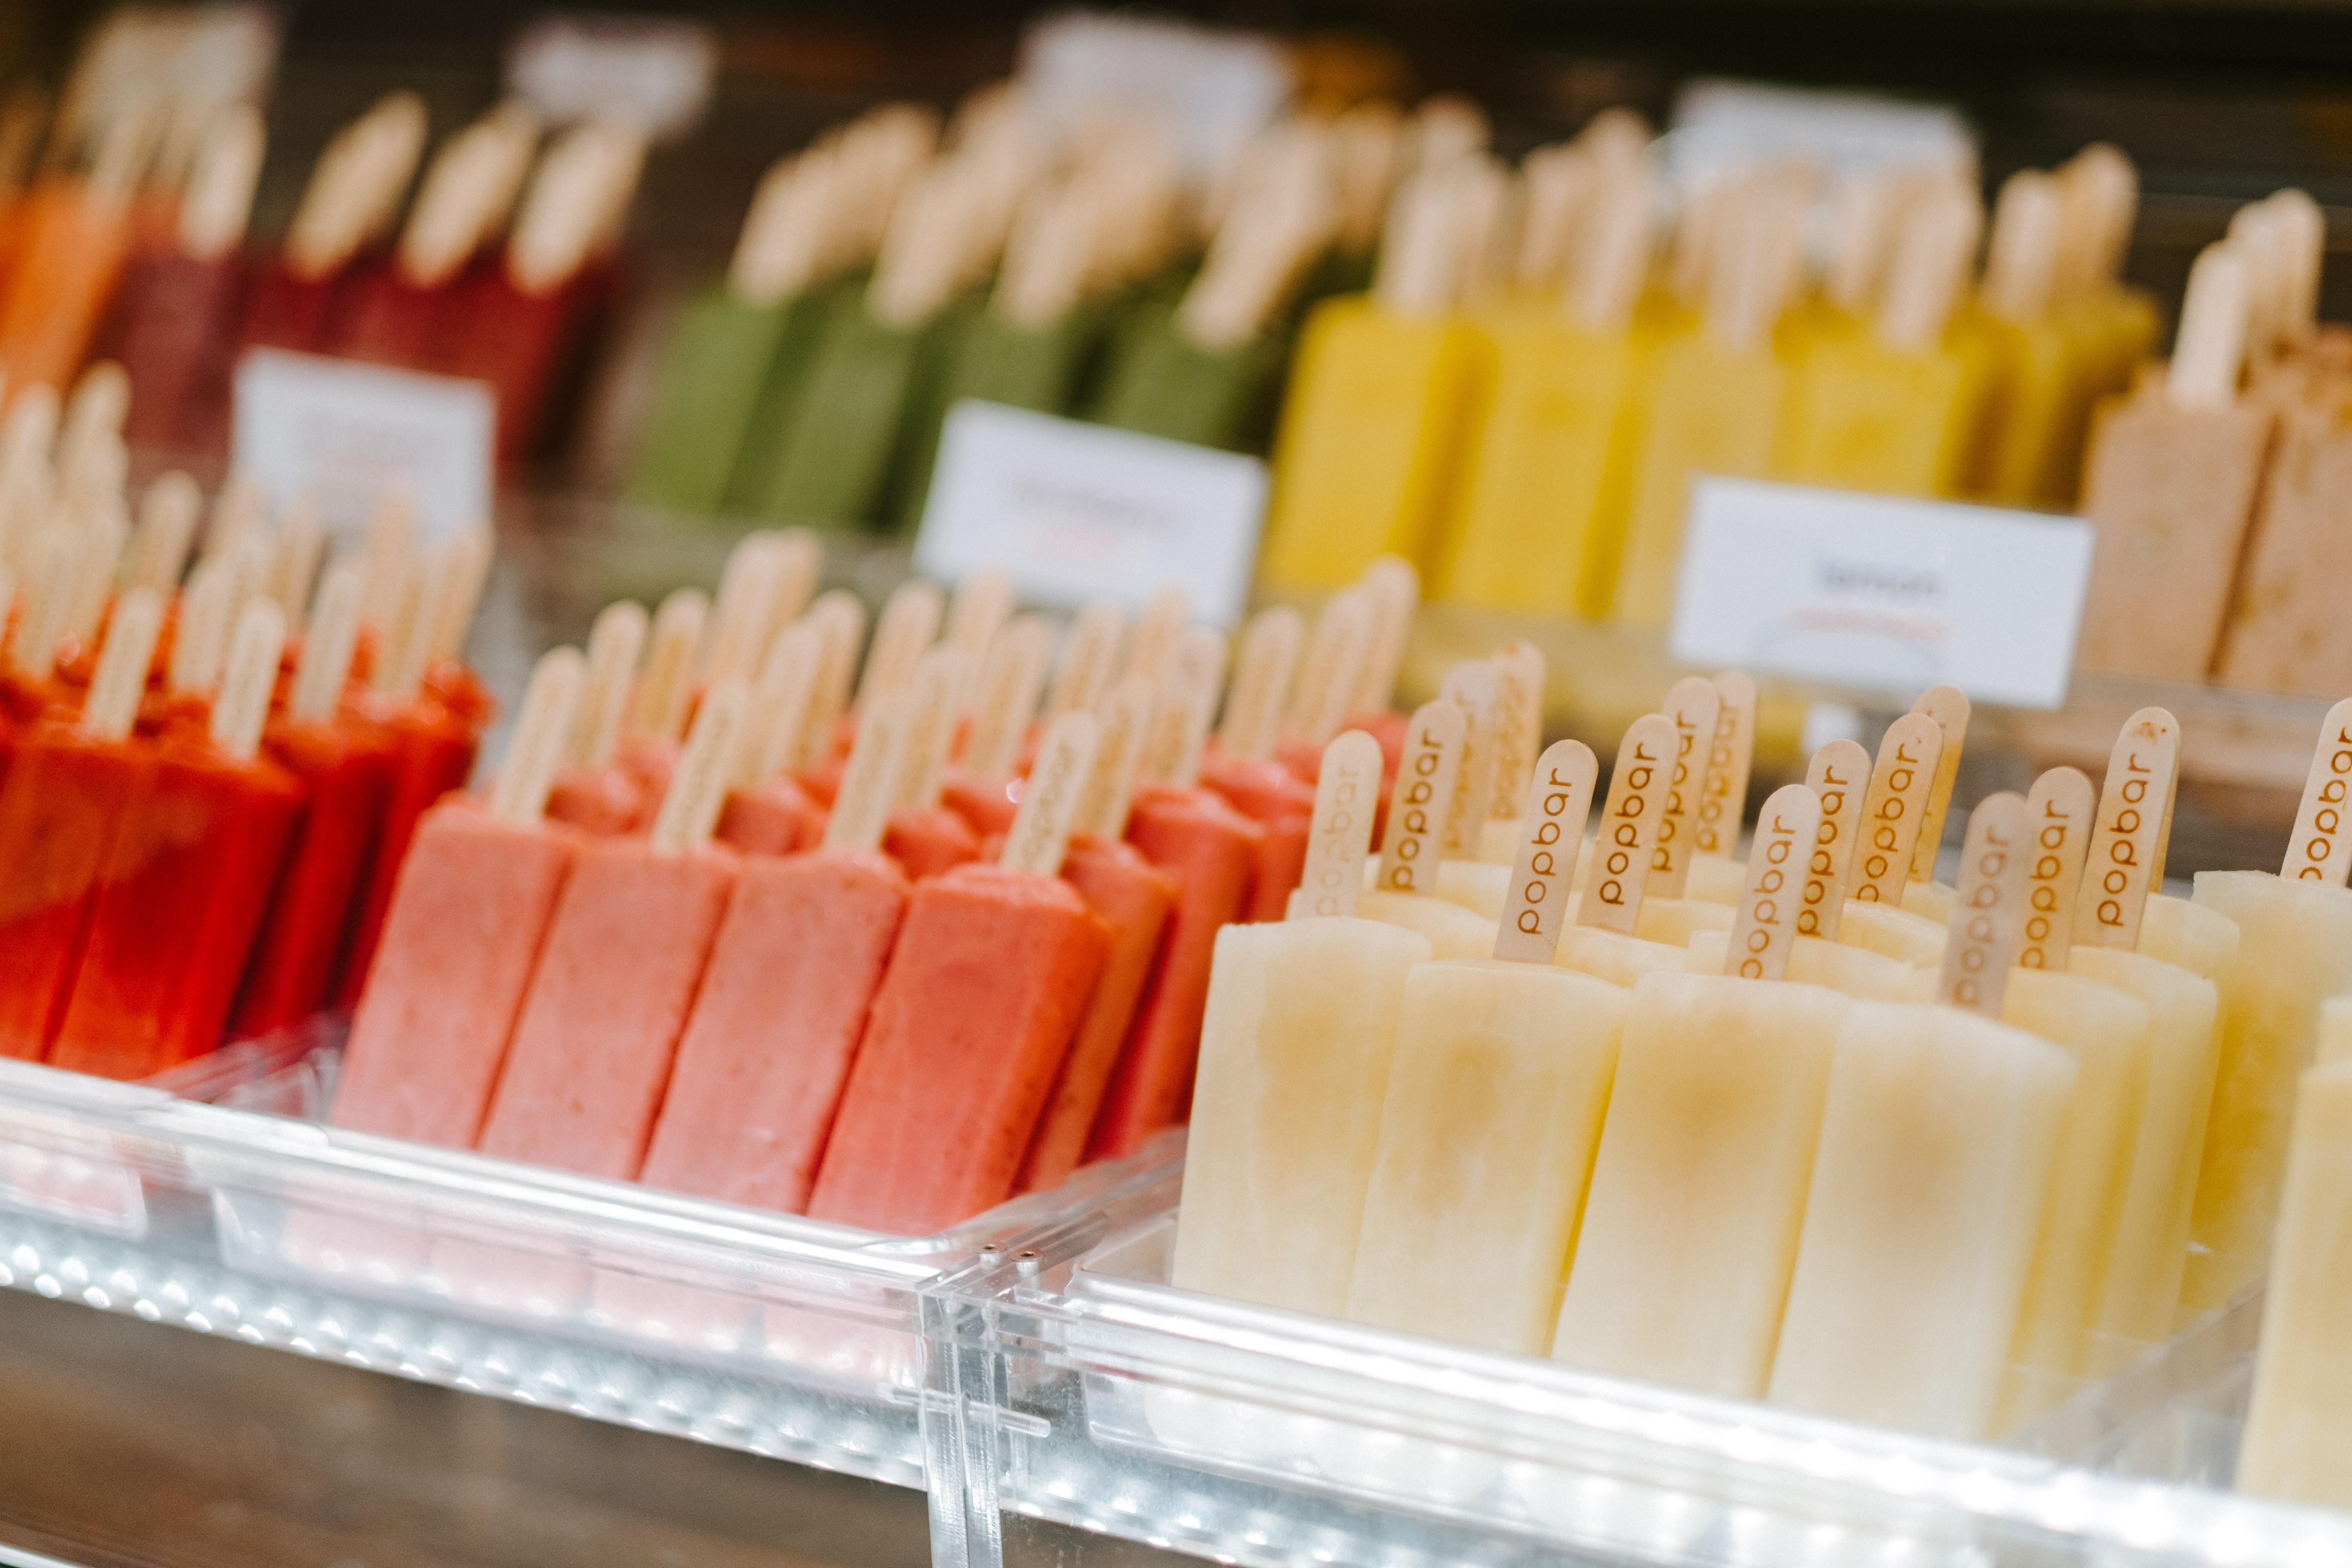 Five Popsicle Flavors That Laobeijings Love